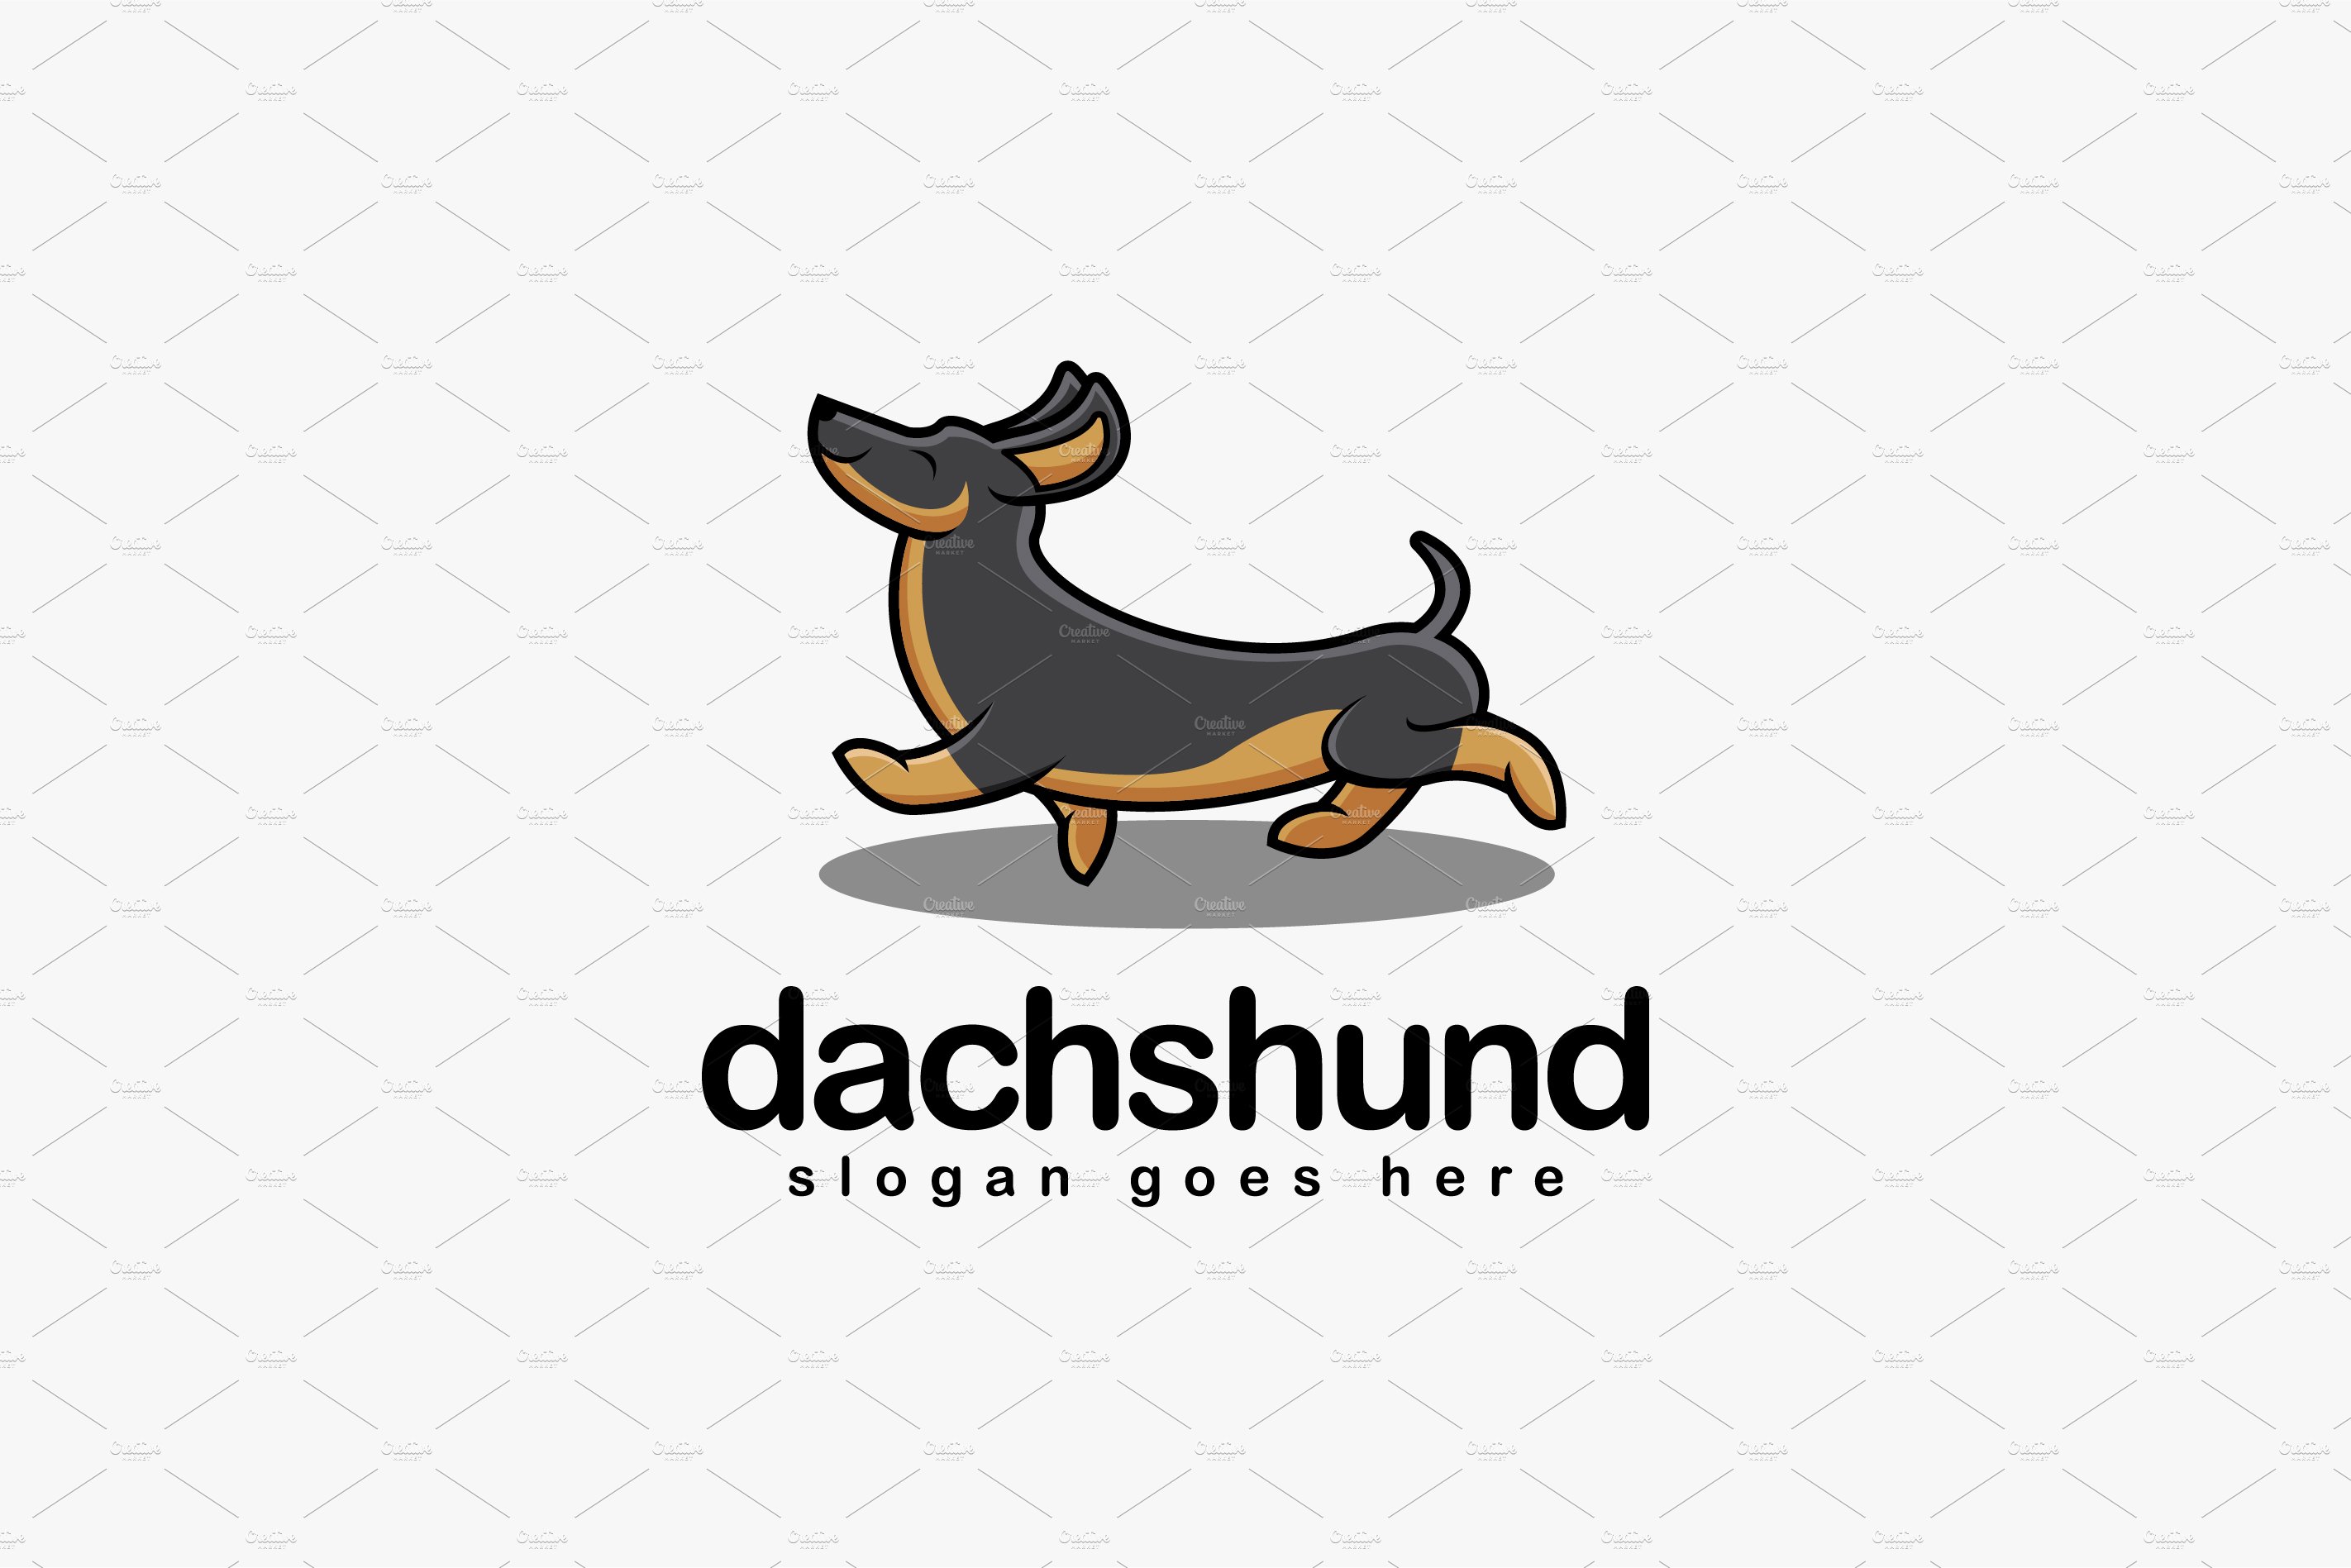 Fun dachshund dog logo mascot cover image.